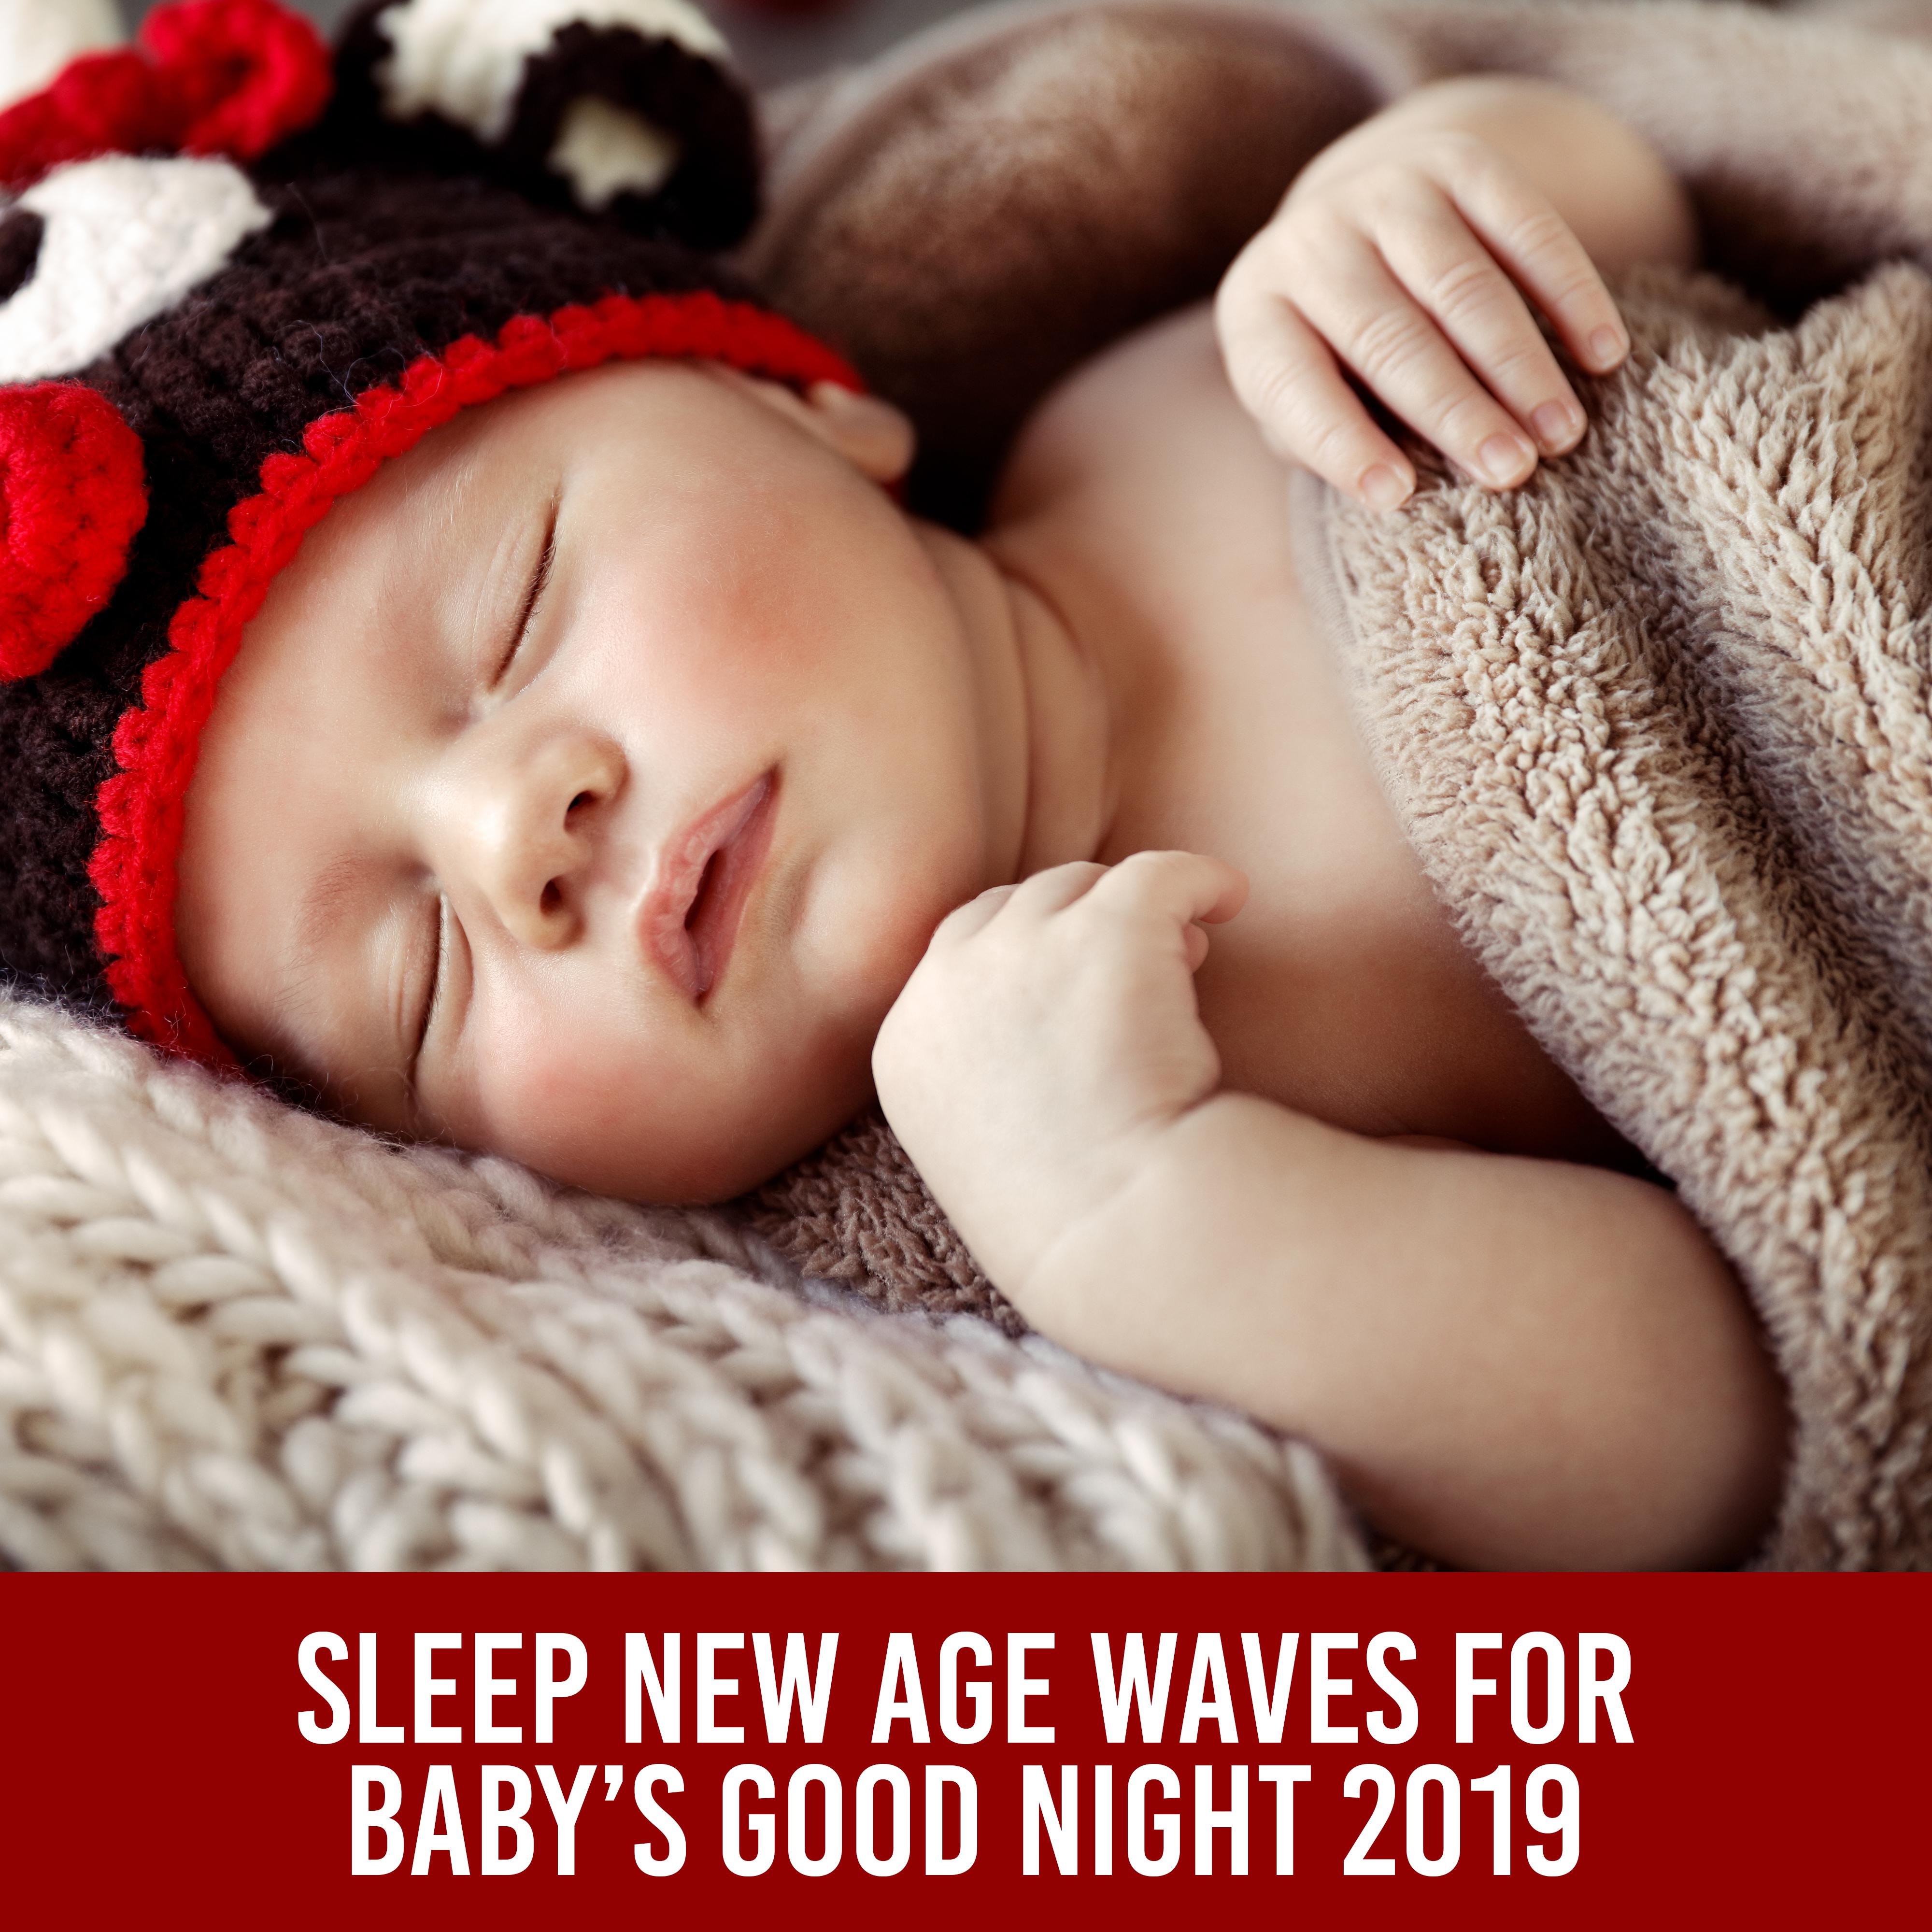 Sleep New Age Waves for Baby' s Good Night 2019